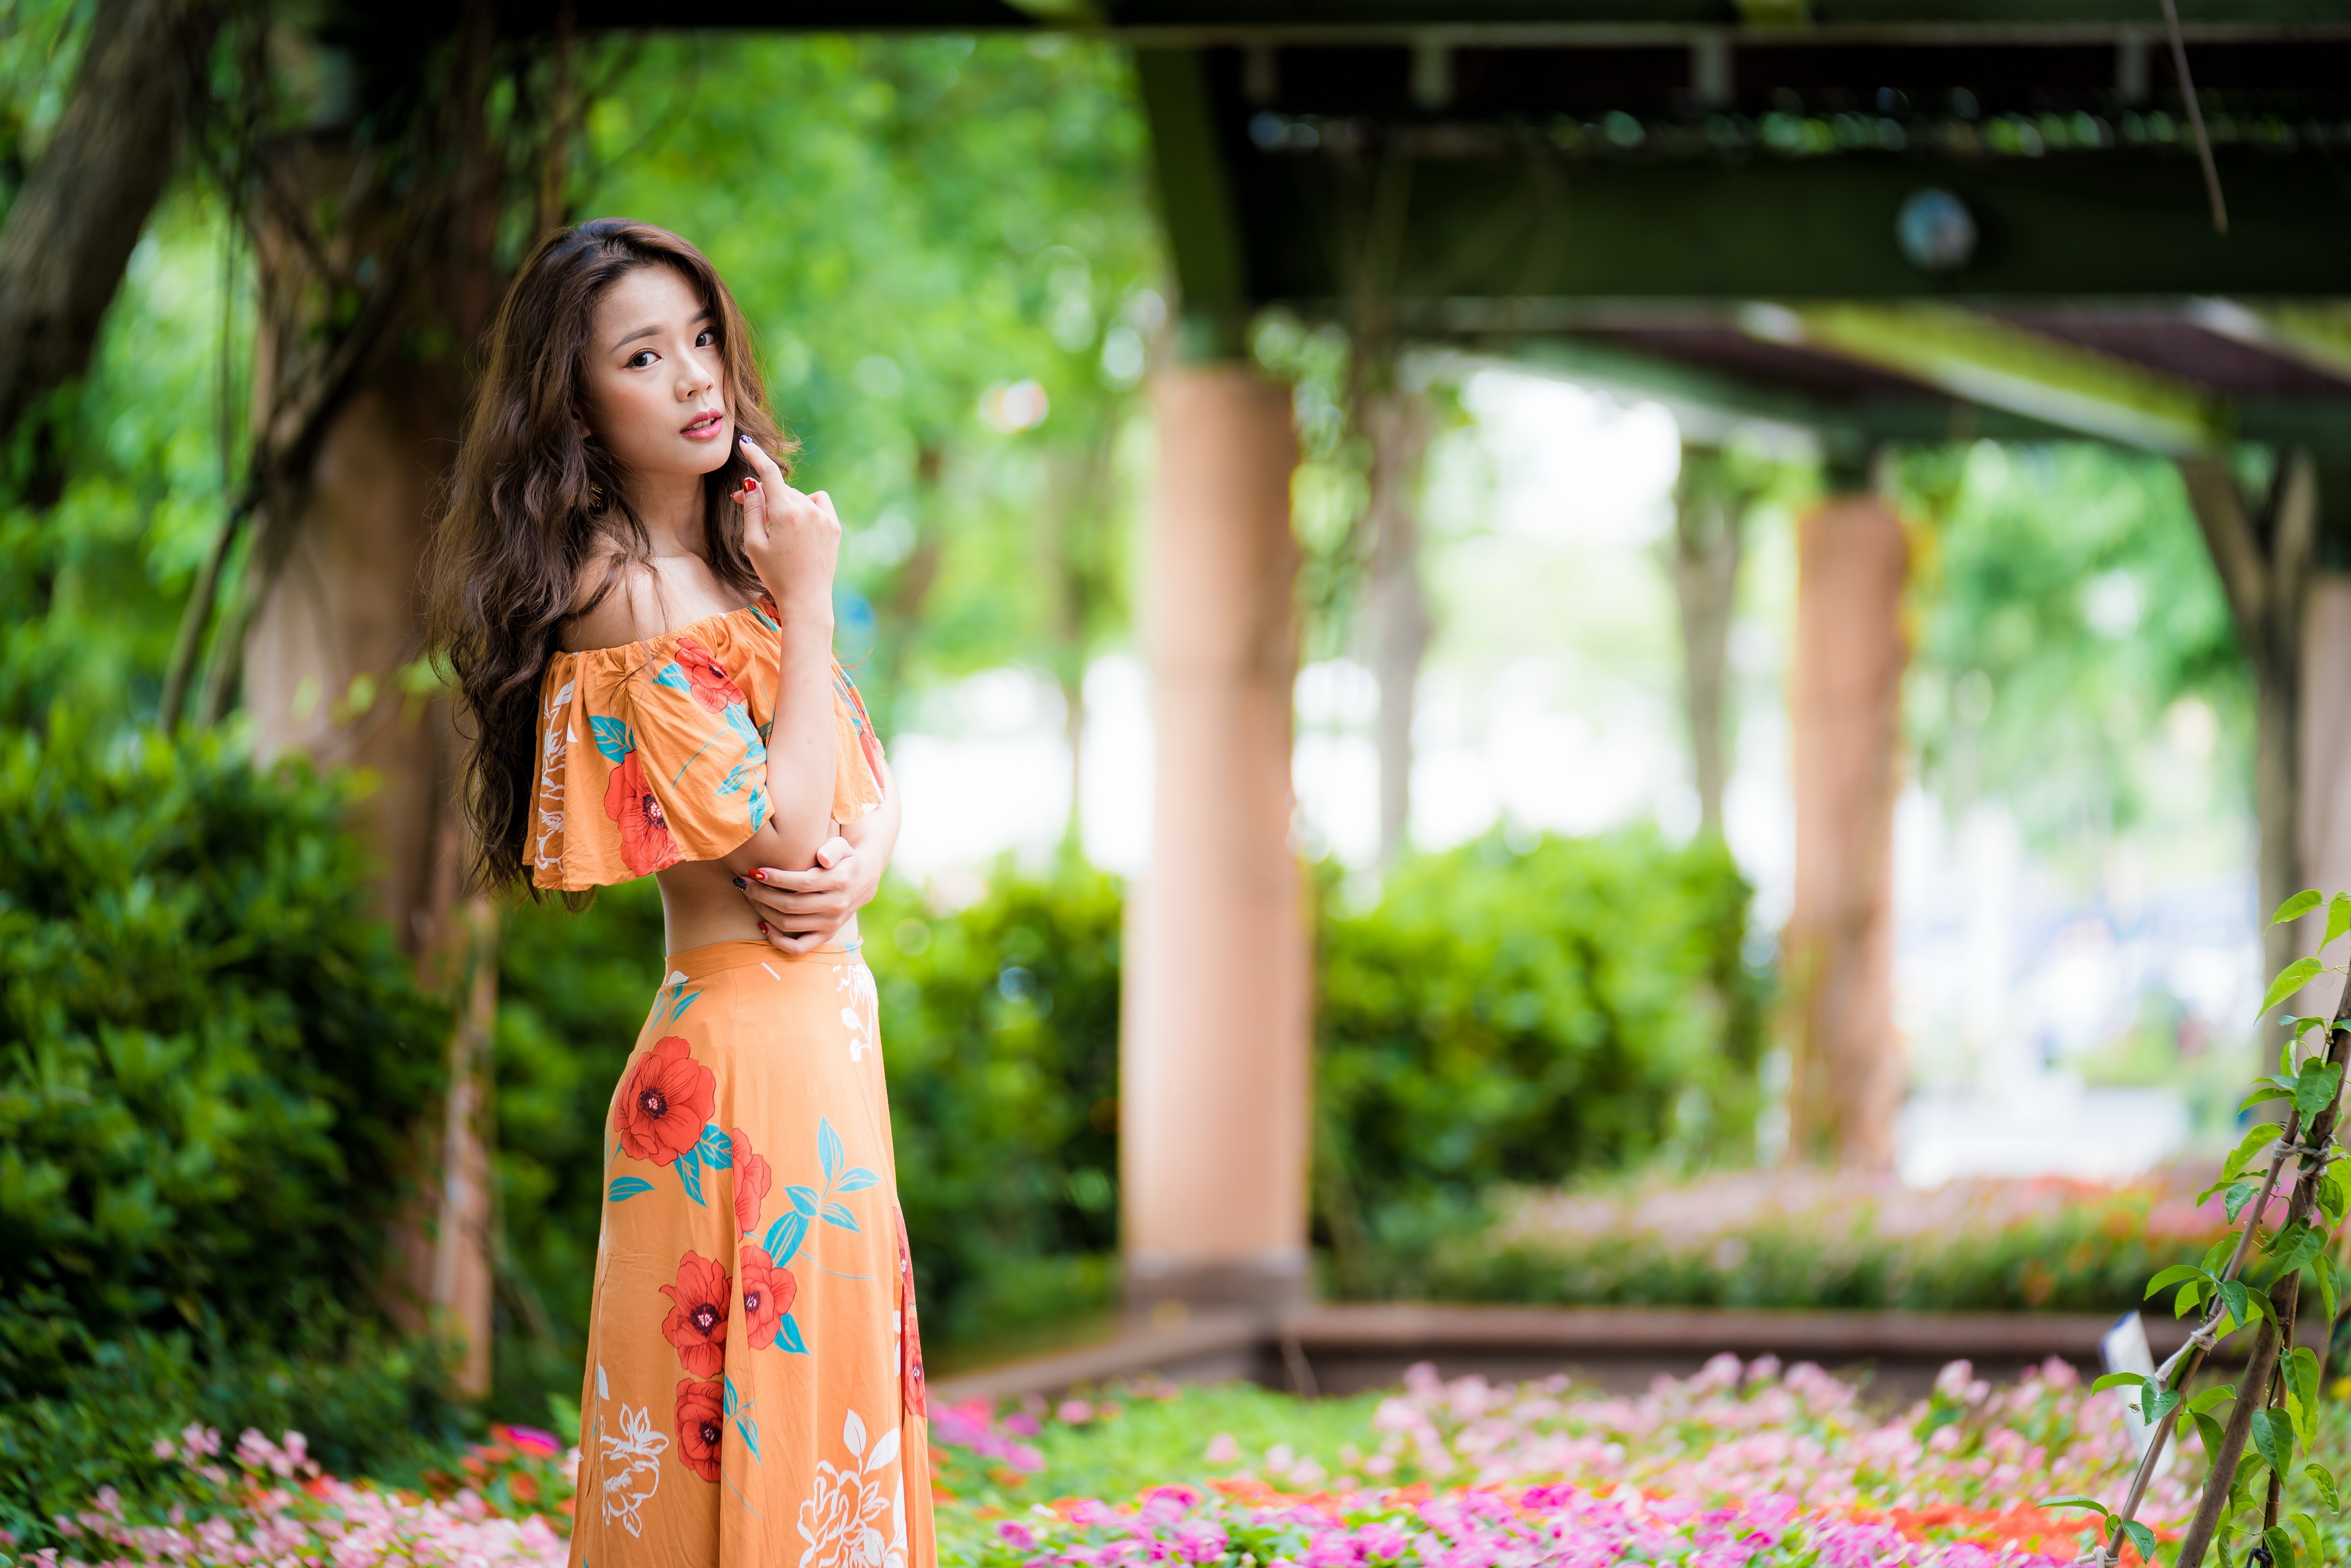 Asian Model Women Long Hair Brunette Women Outdoors Depth Of Field Flower Dress Bushes Trees Flowers 3840x2561